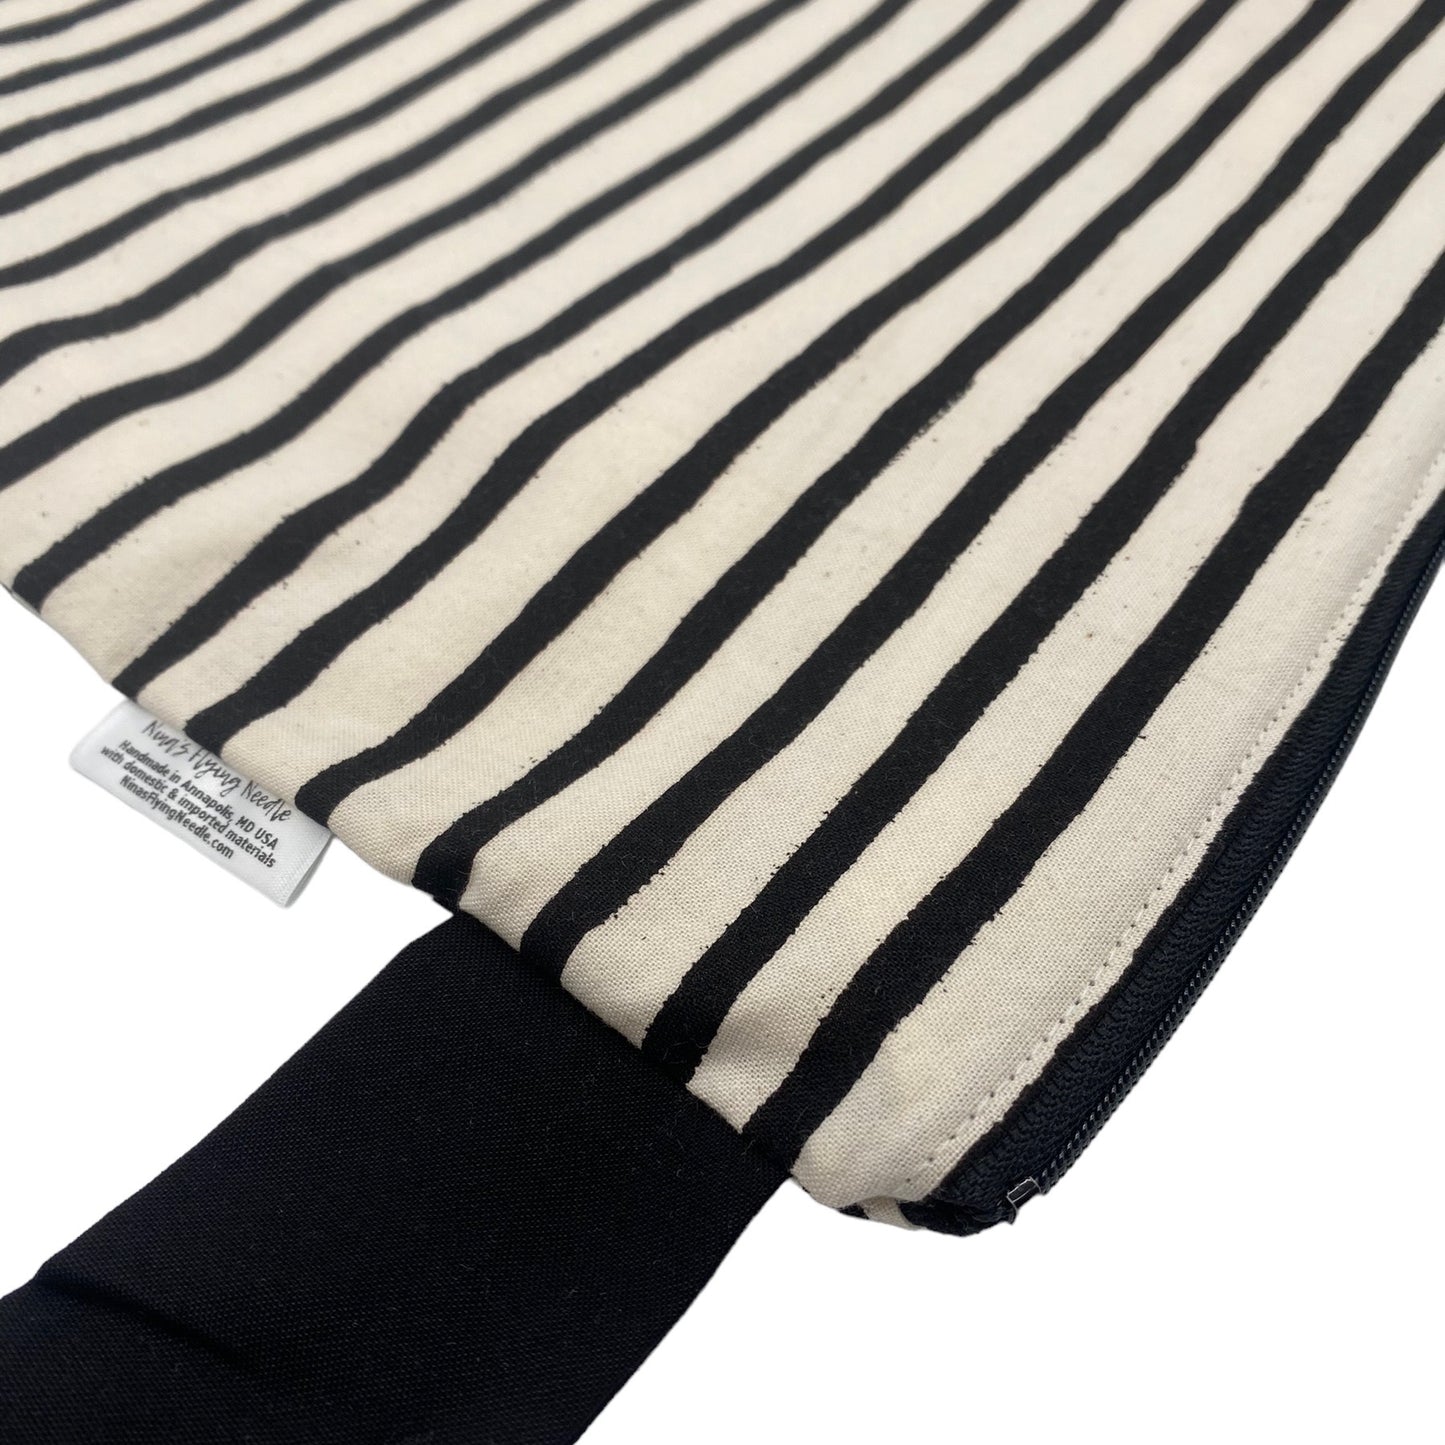 Large Wet Bag with Handle Stripes Black Cream